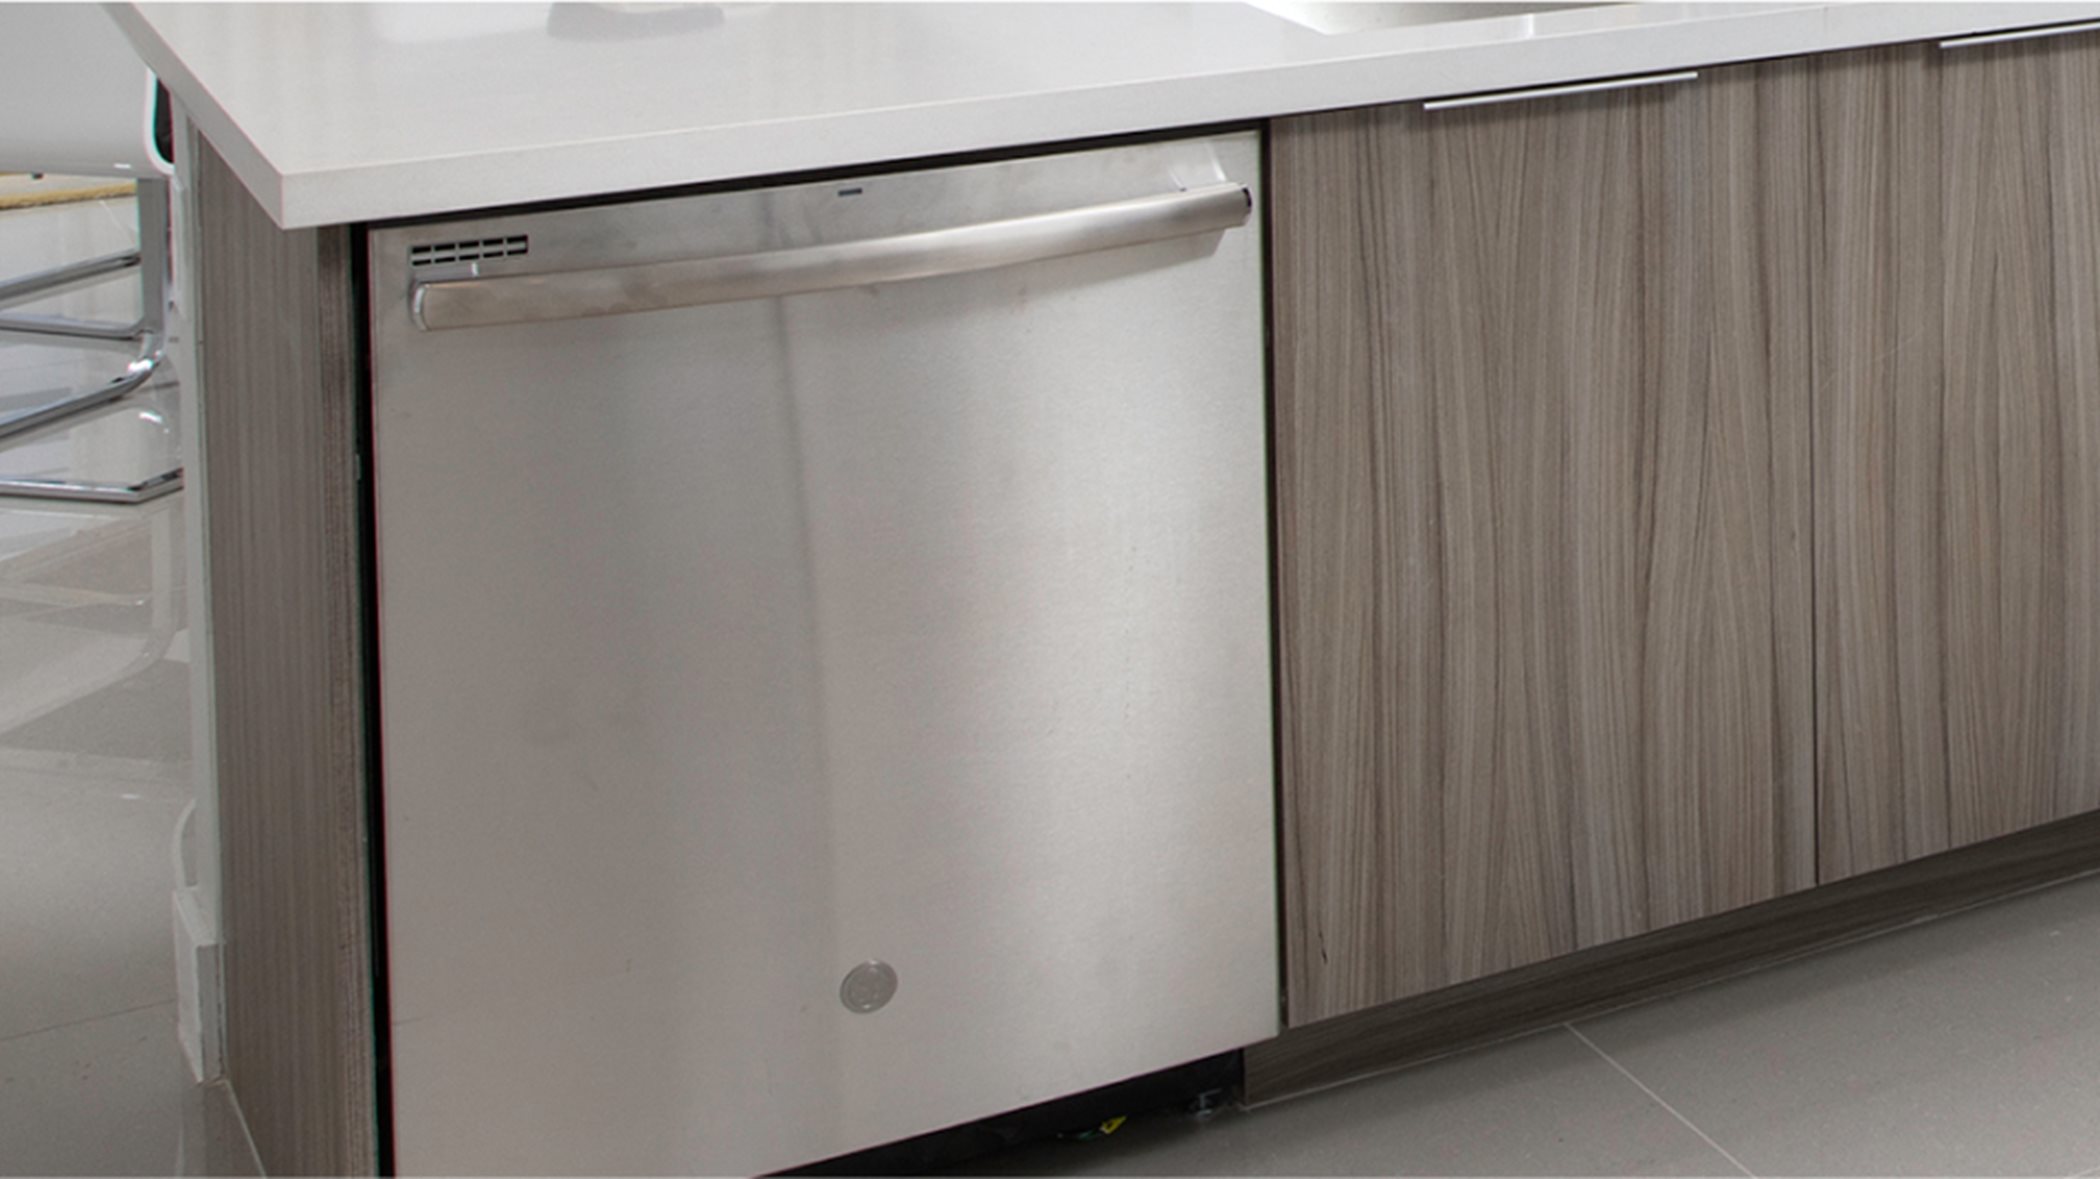 Landmark Condominiums Model E Dishwasher